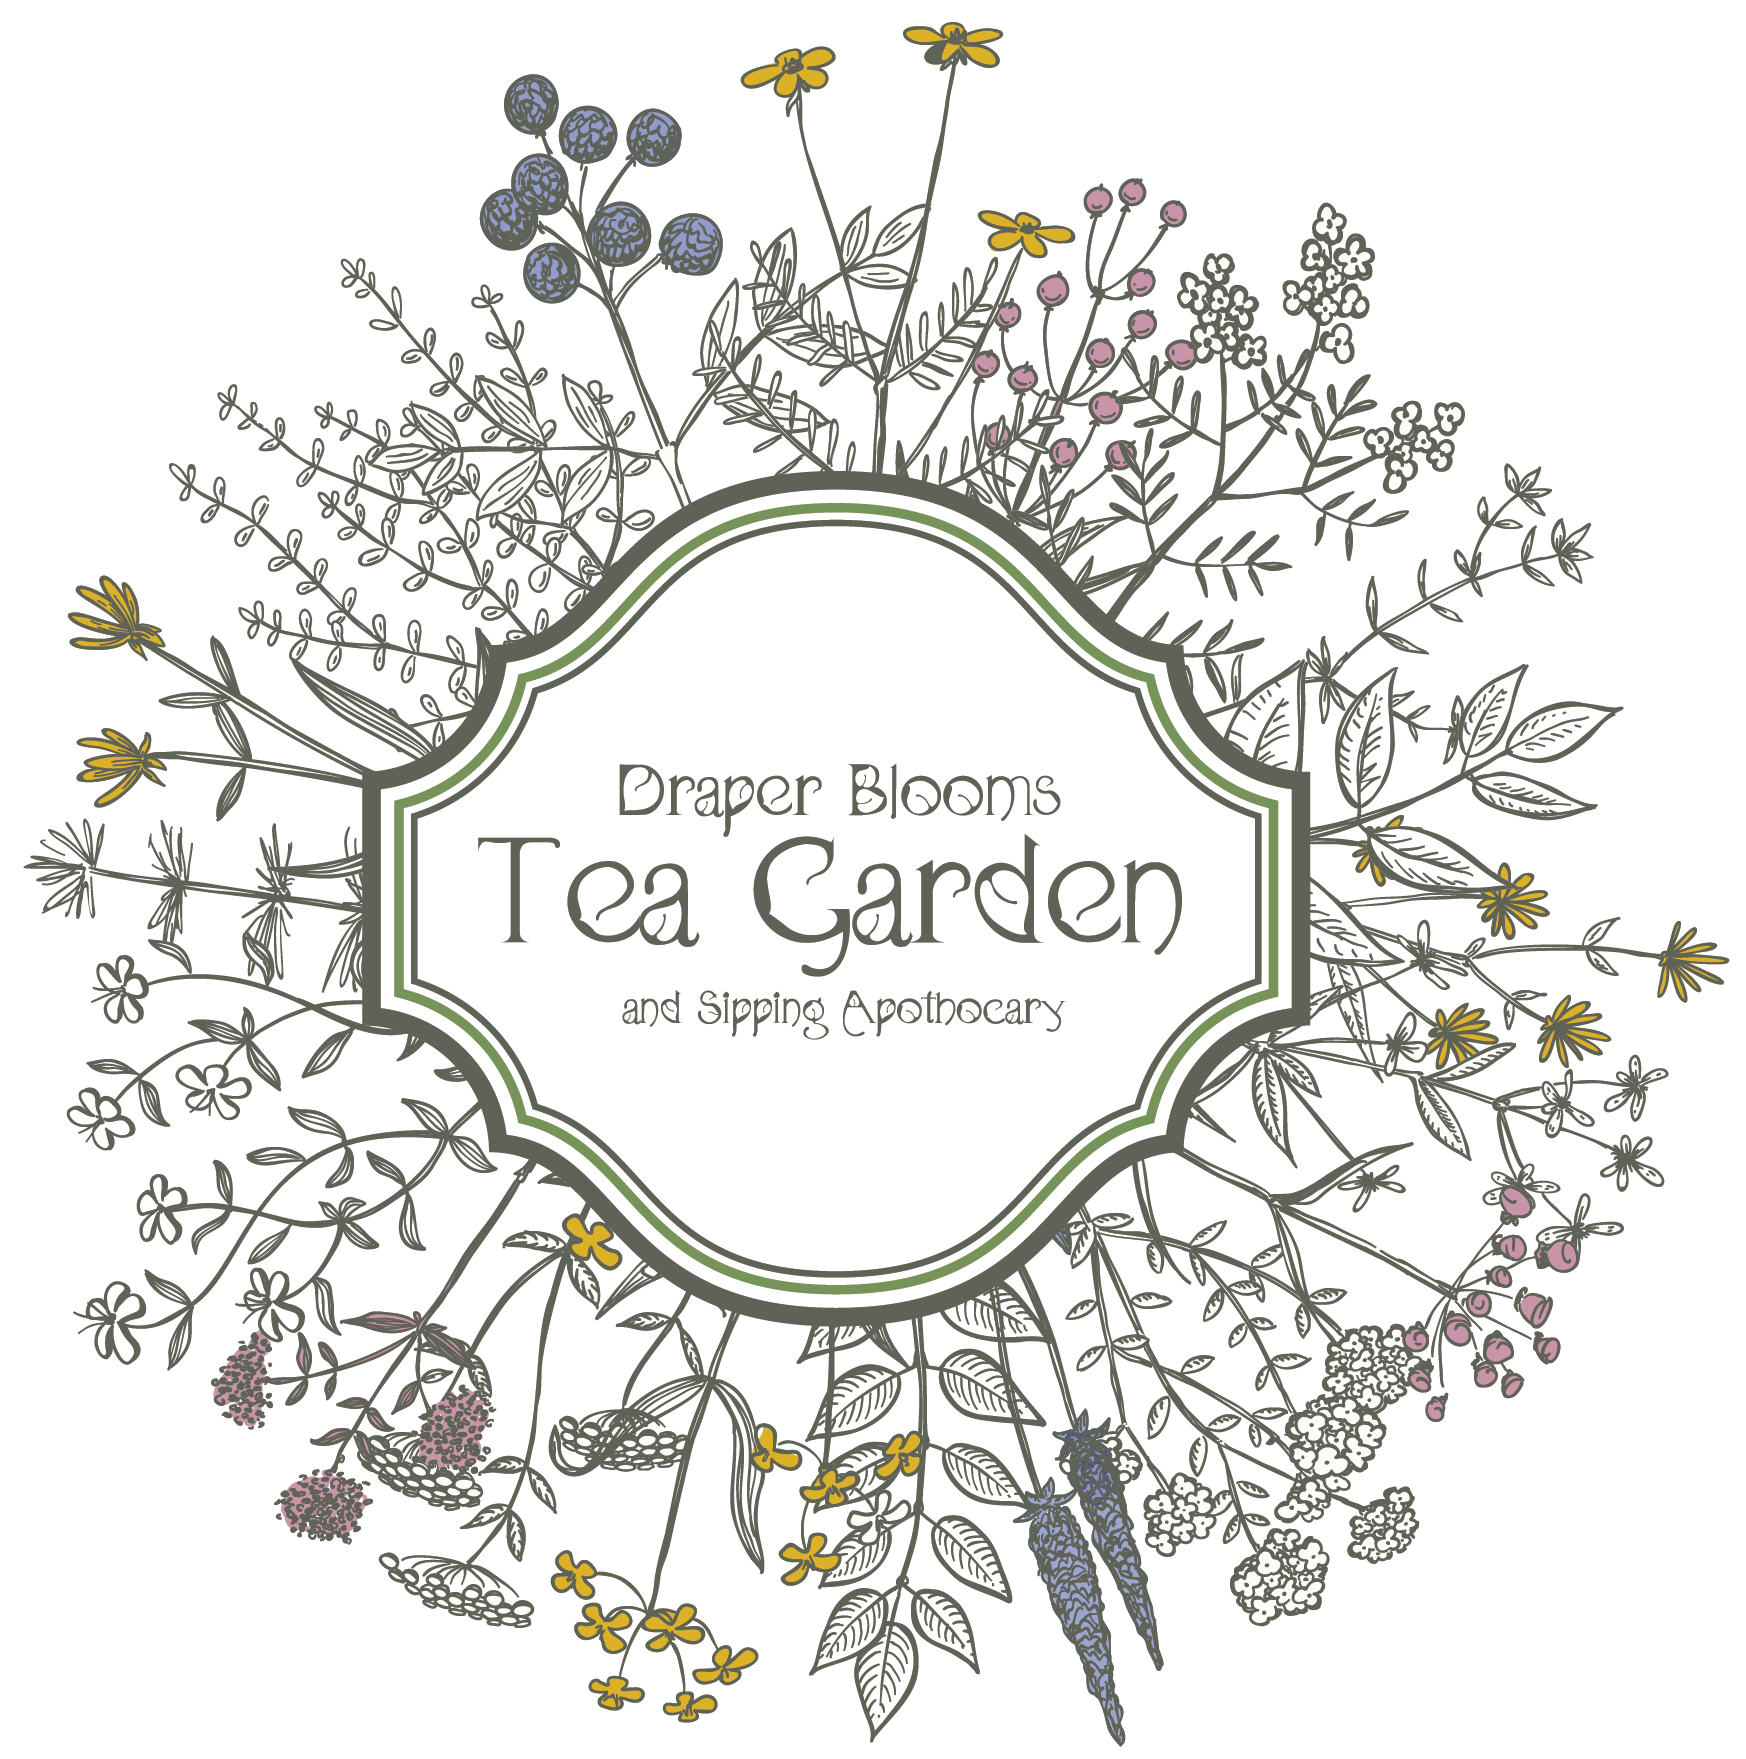 Draper Blooms Tea Garden and Sipping Apothecary